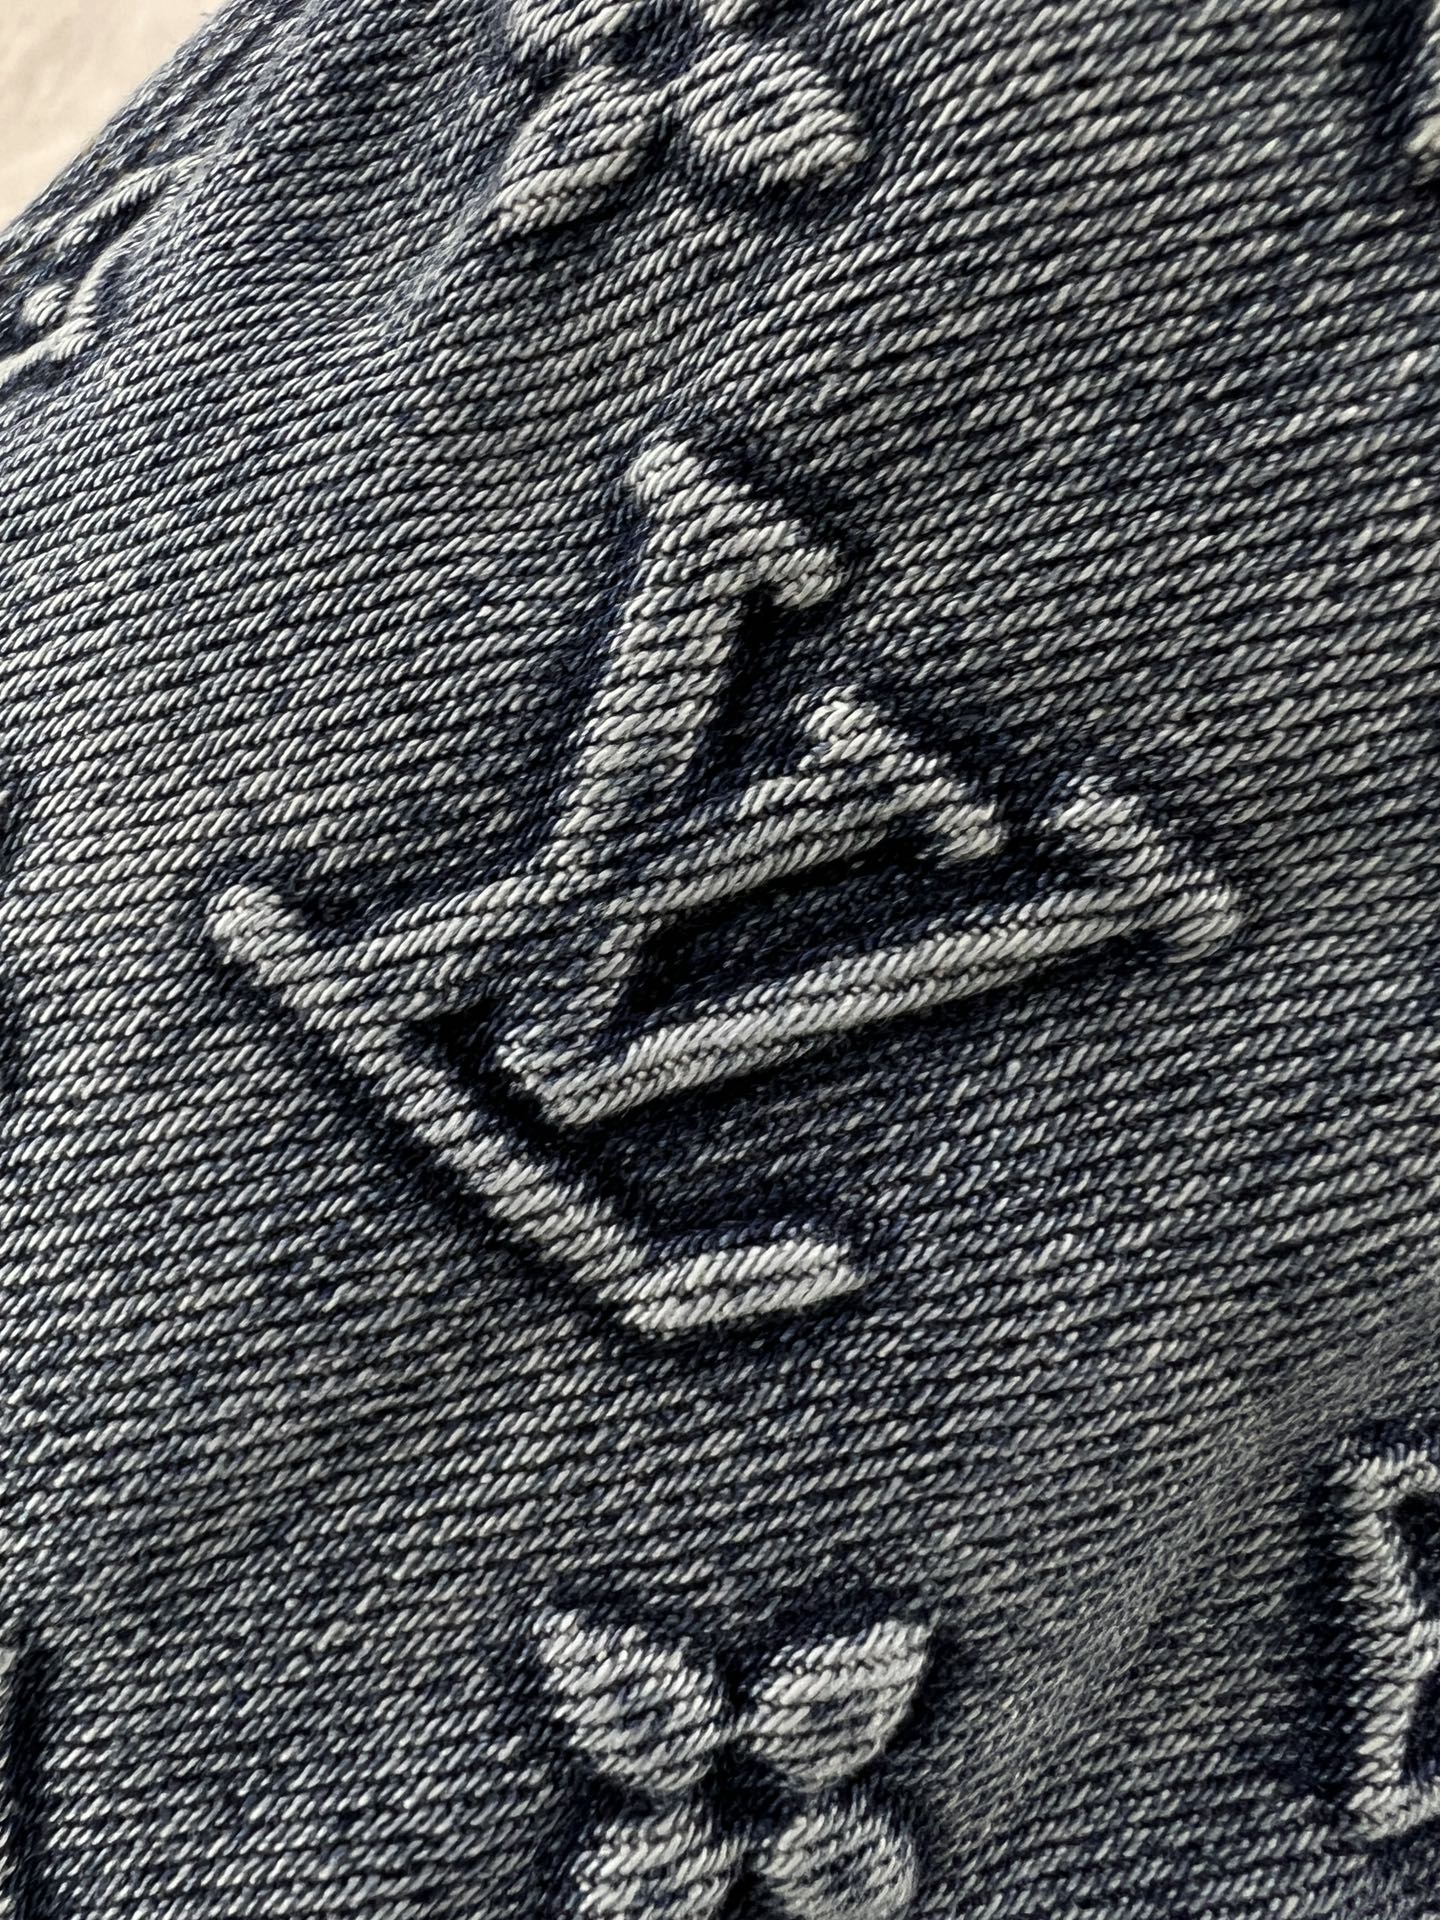 v2024SS新品男士牛仔短裤细节相当精湛考究经过水洗打磨工艺变得非常出彩塑造出不羁和硬朗的个性色彩独特